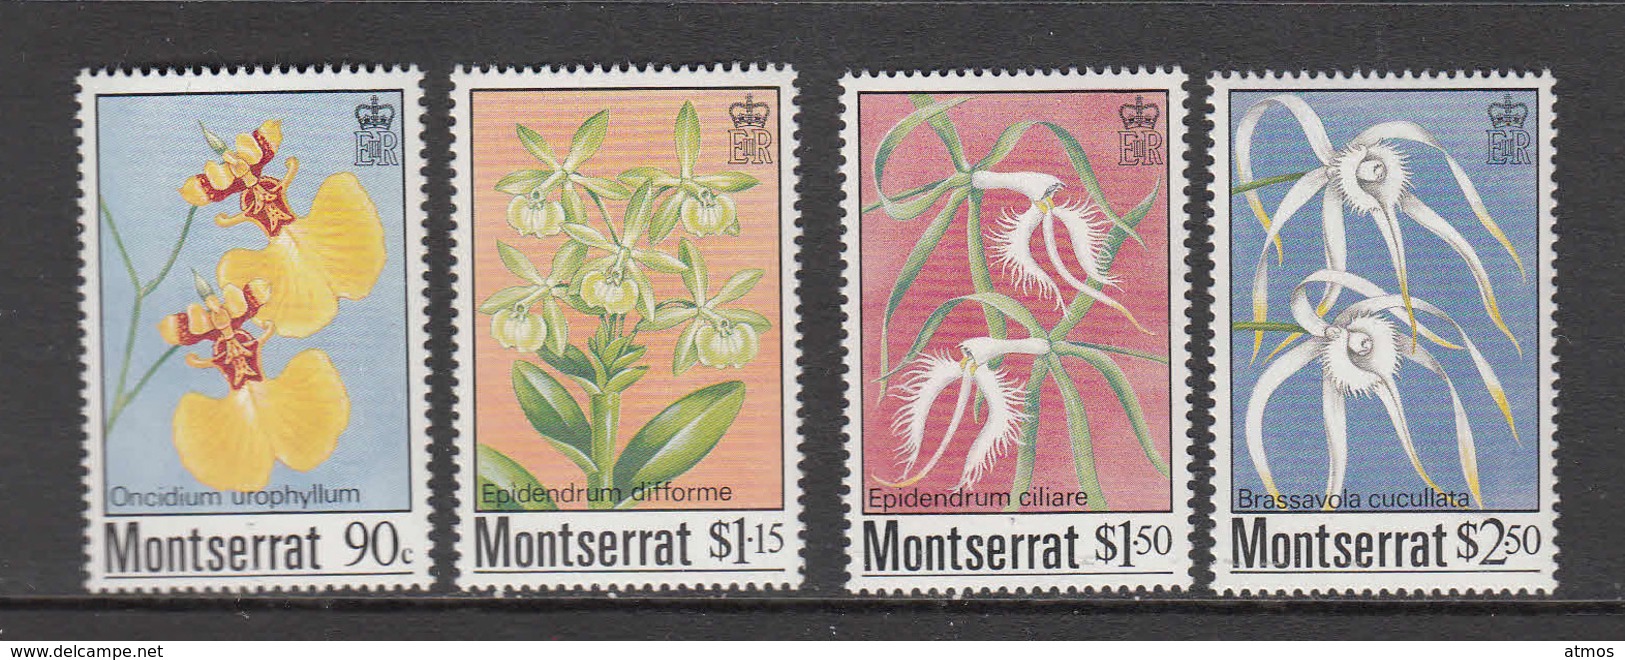 Monsterrat MNH Michel Nr 568/71 From 1985 Catw 5.00 EUR - Montserrat